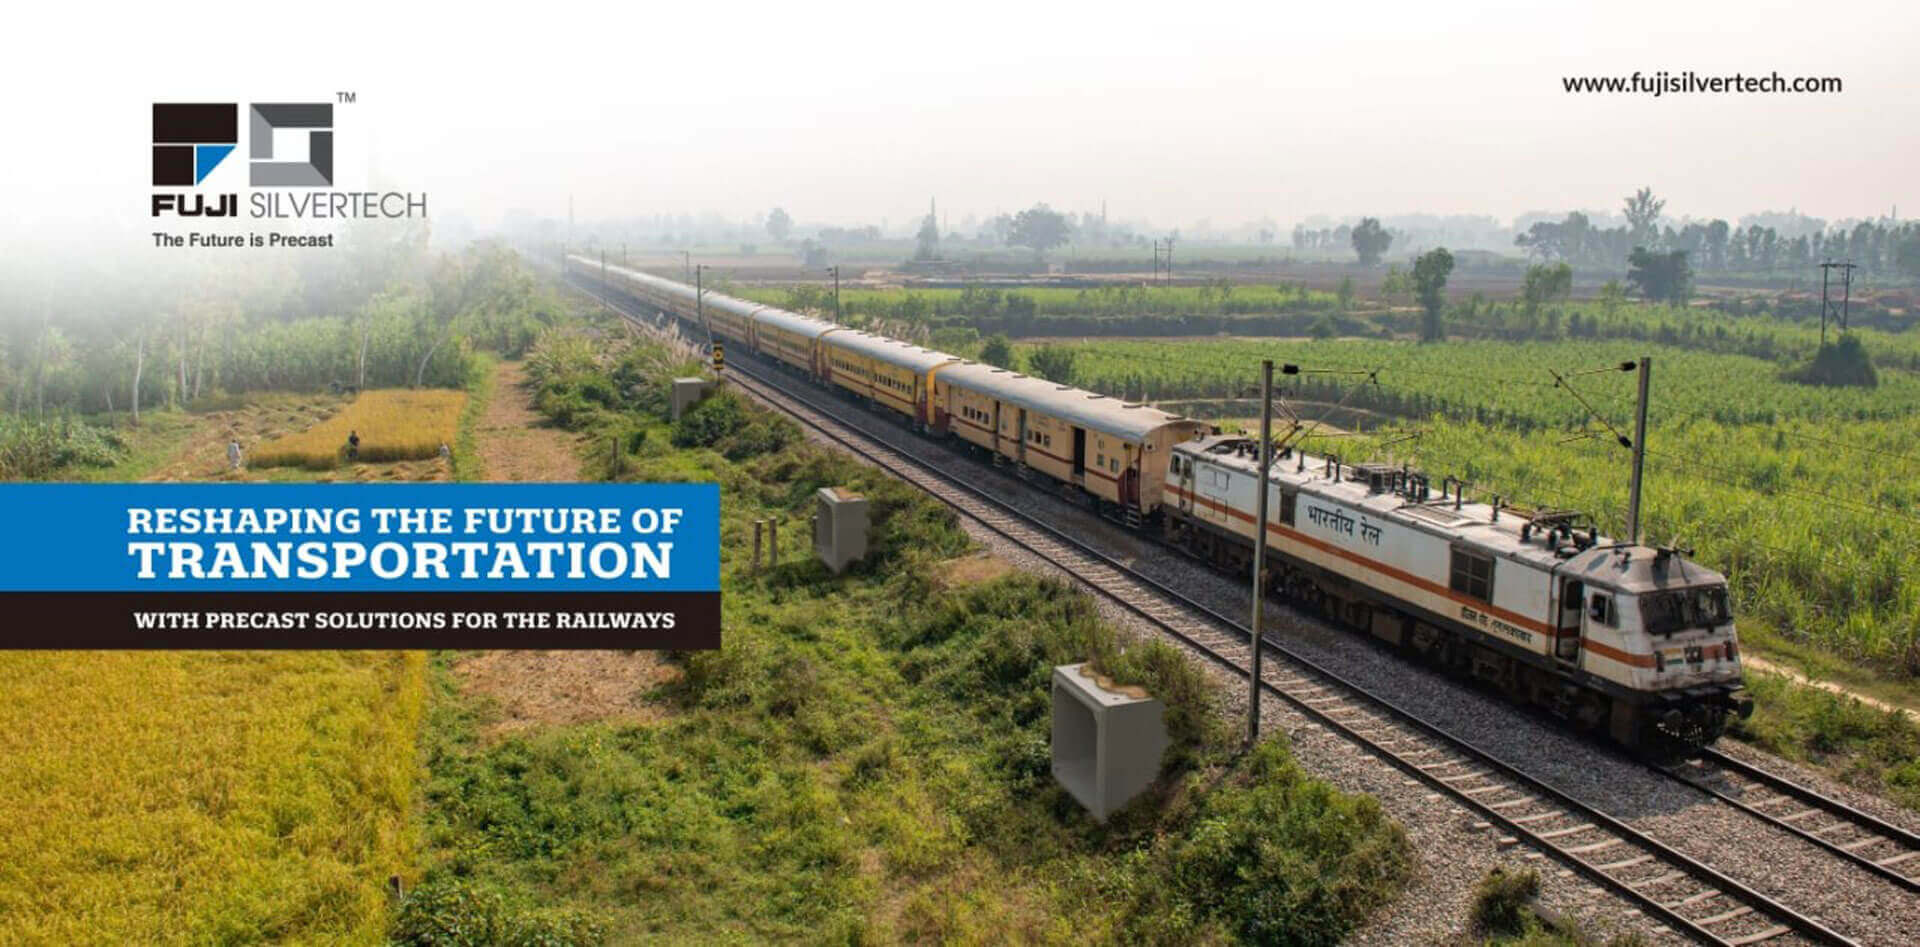 Precast Solutions for the Railways